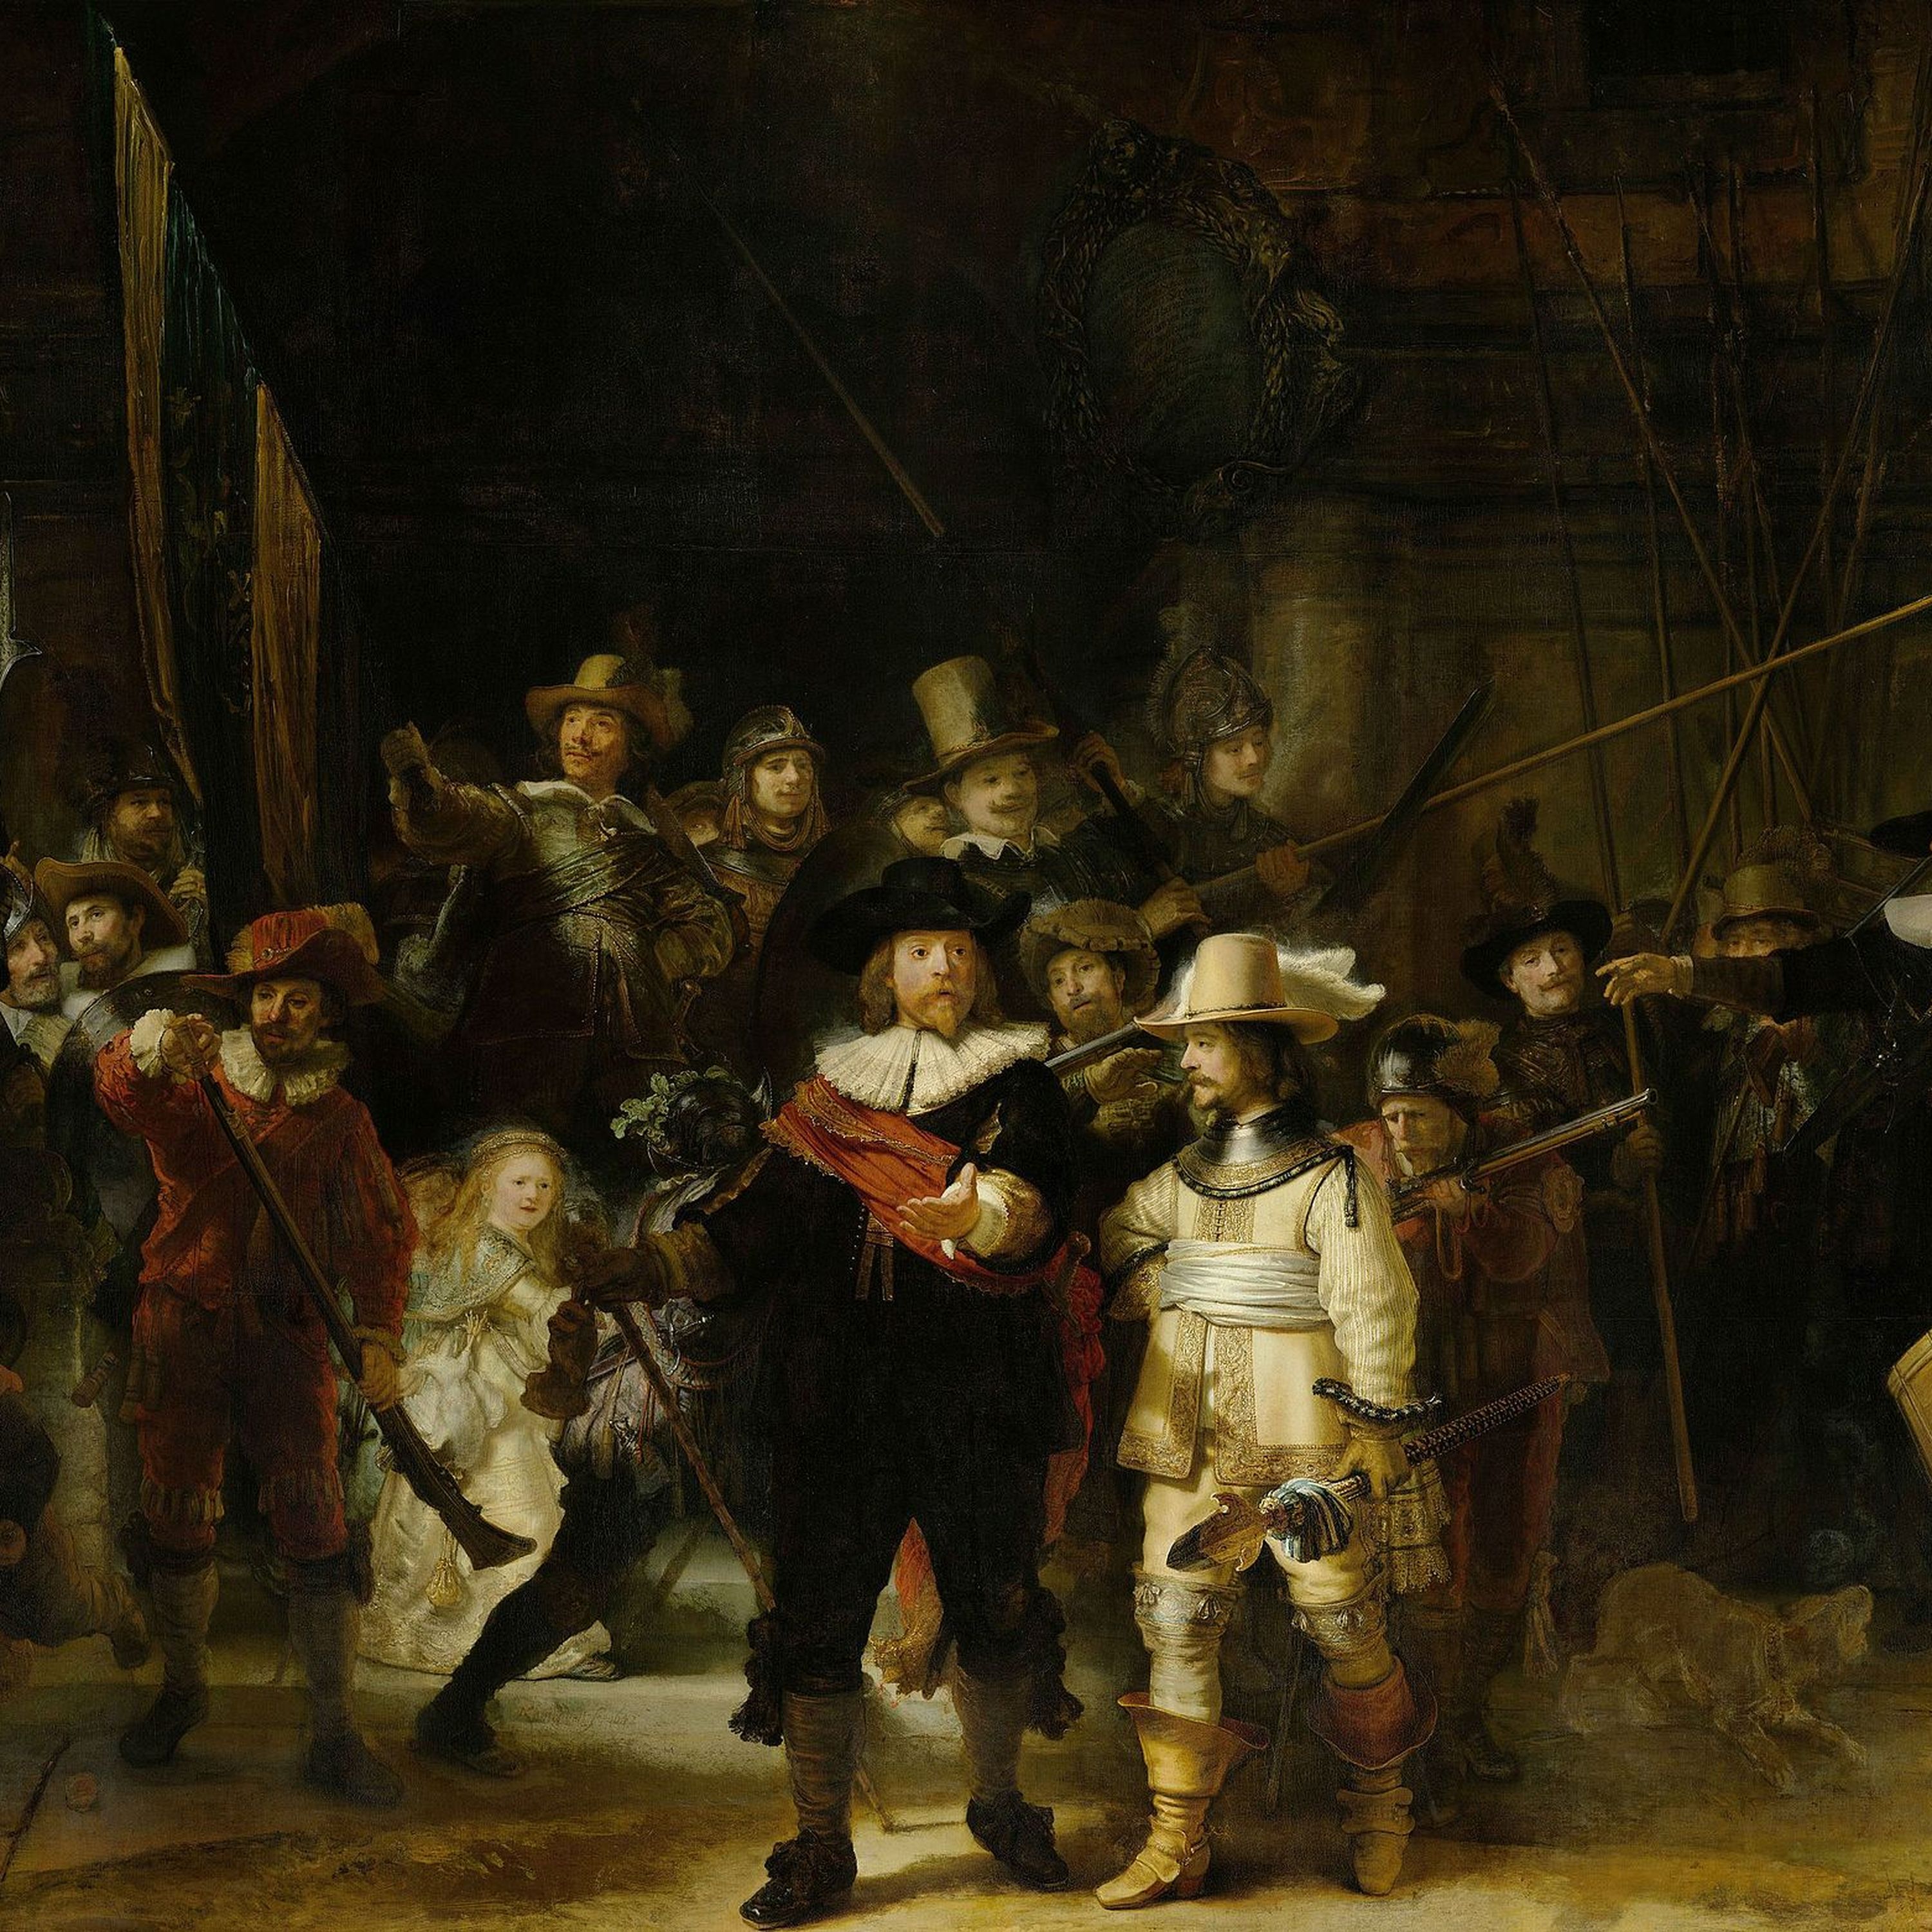 Bonus Minisode: The Nightwatch by Rembrandt